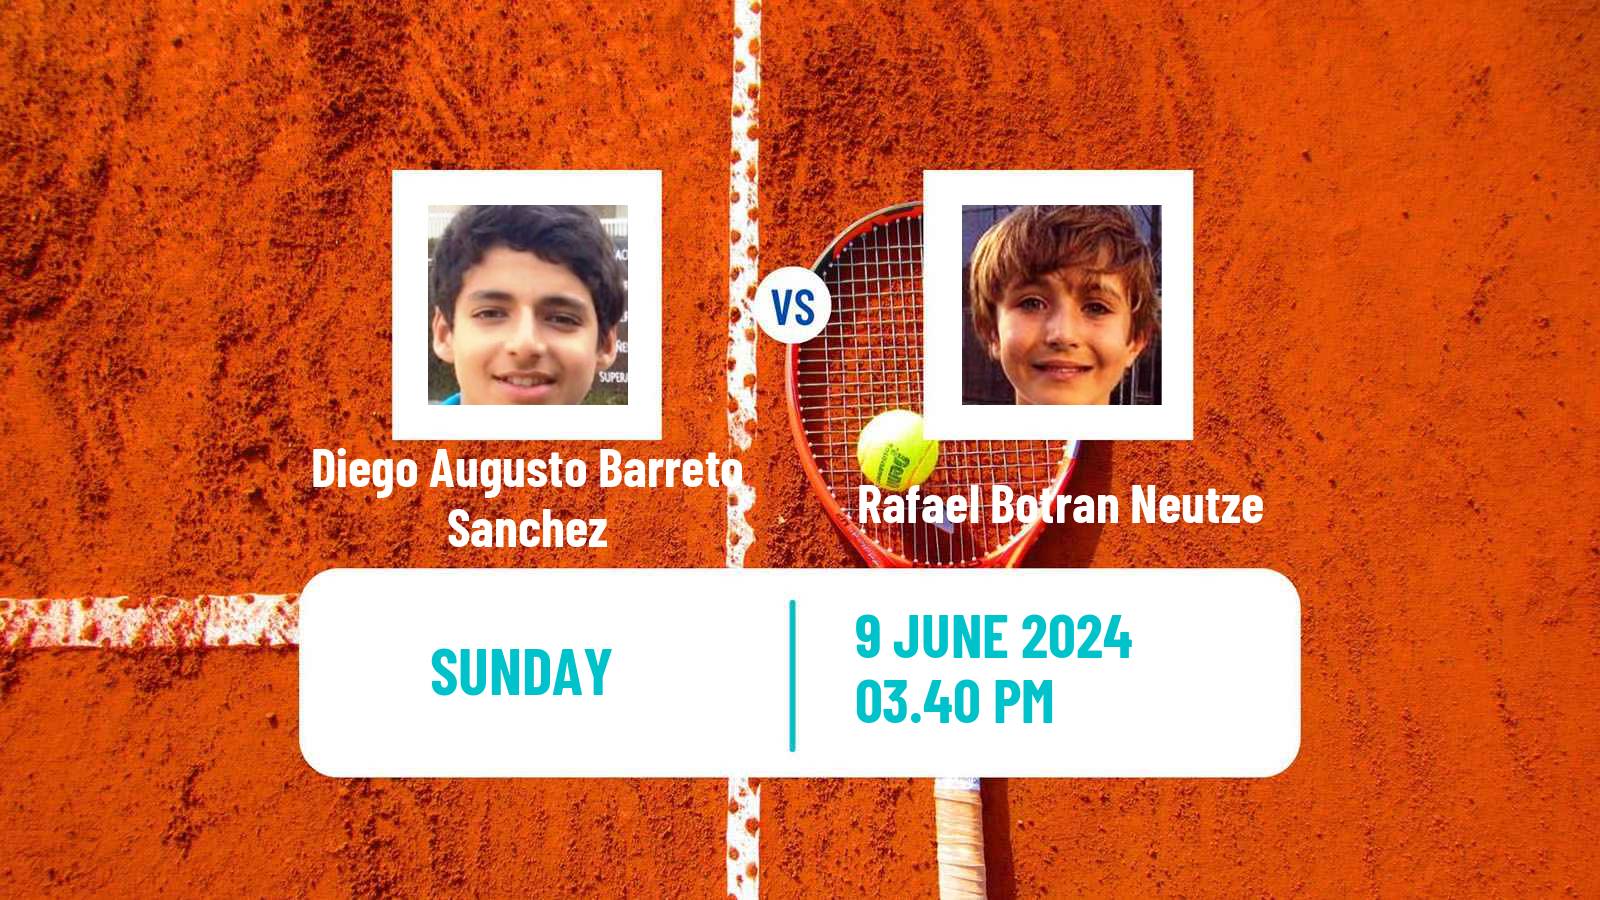 Tennis Lima Challenger Men Diego Augusto Barreto Sanchez - Rafael Botran Neutze